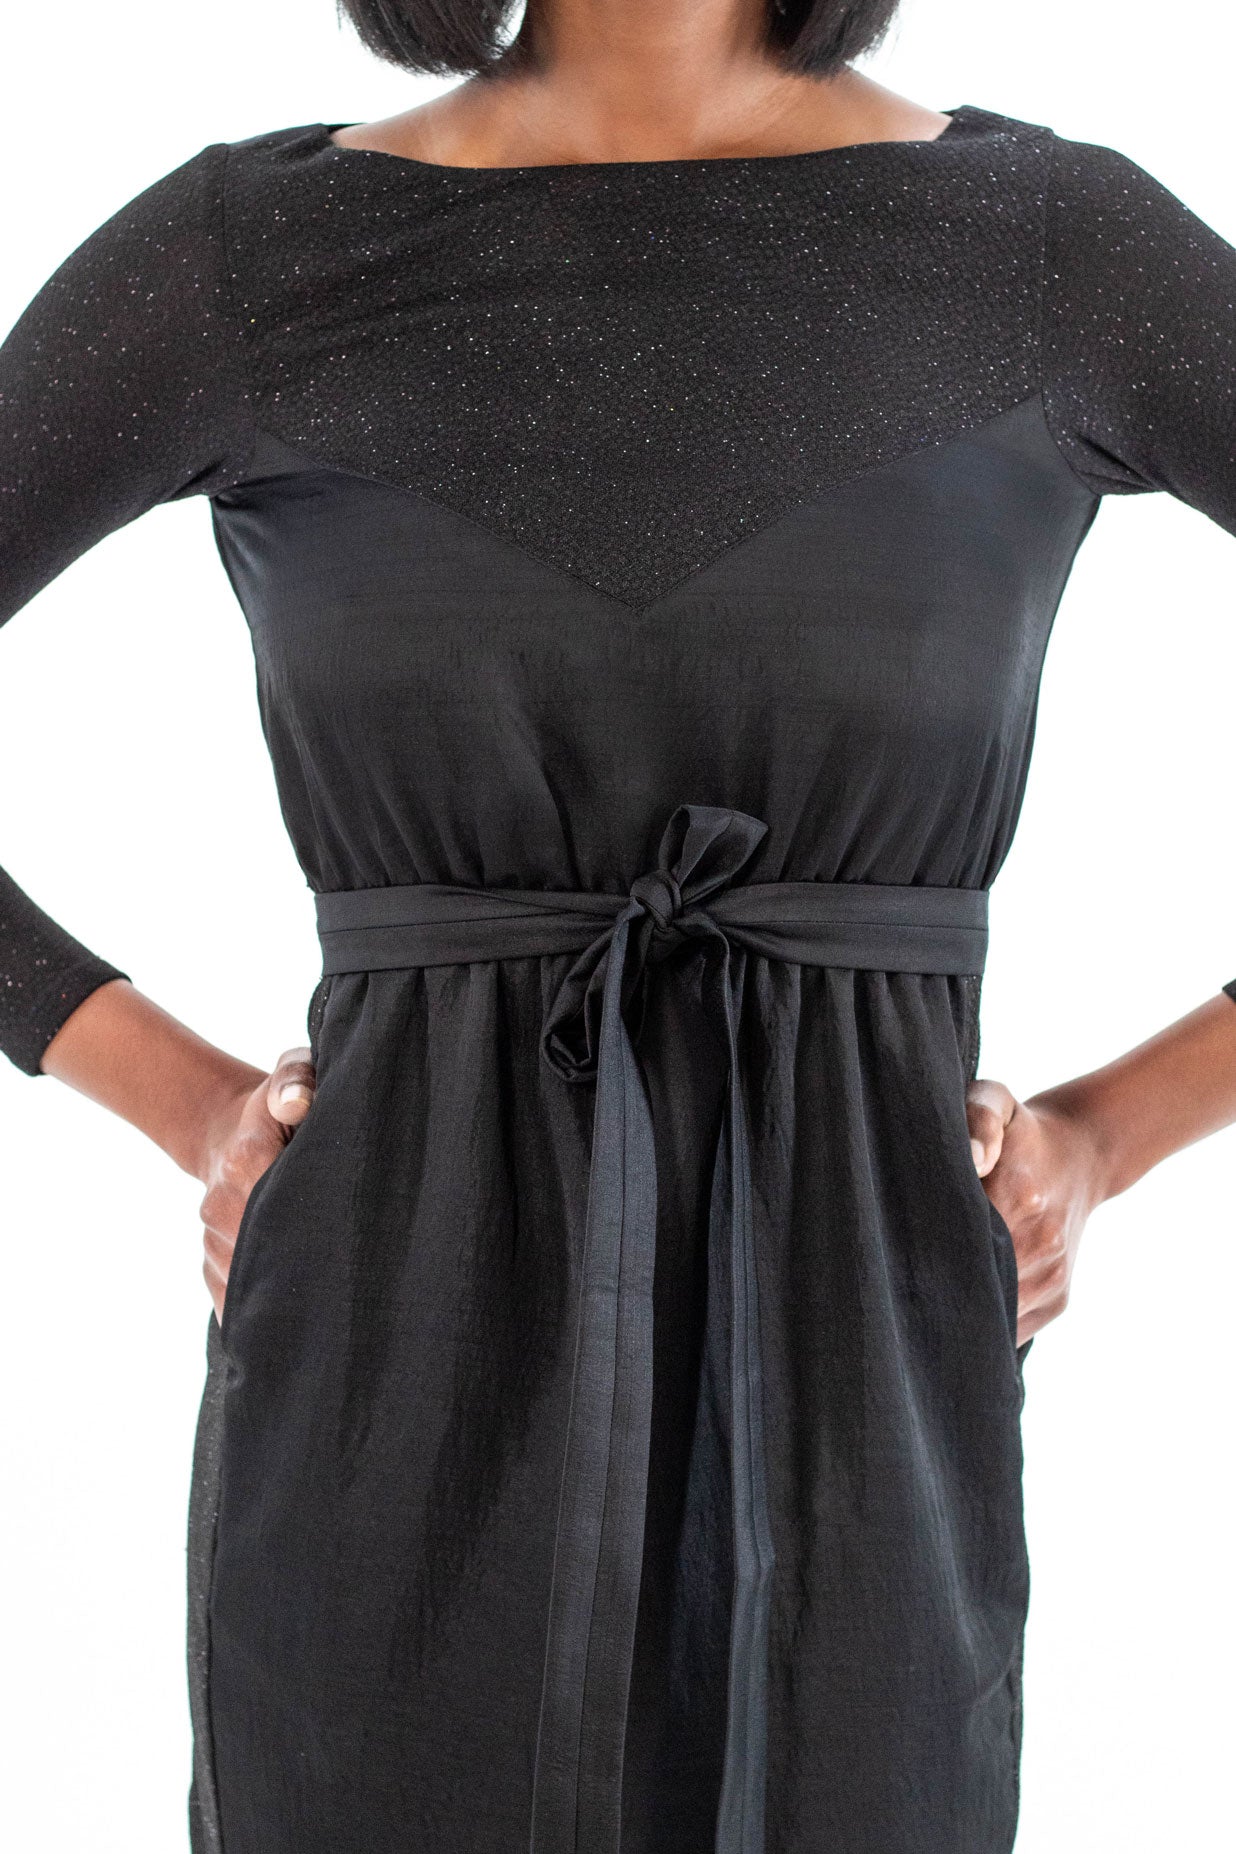 Elegant Black Semi-Formal Party Dress with Pockets